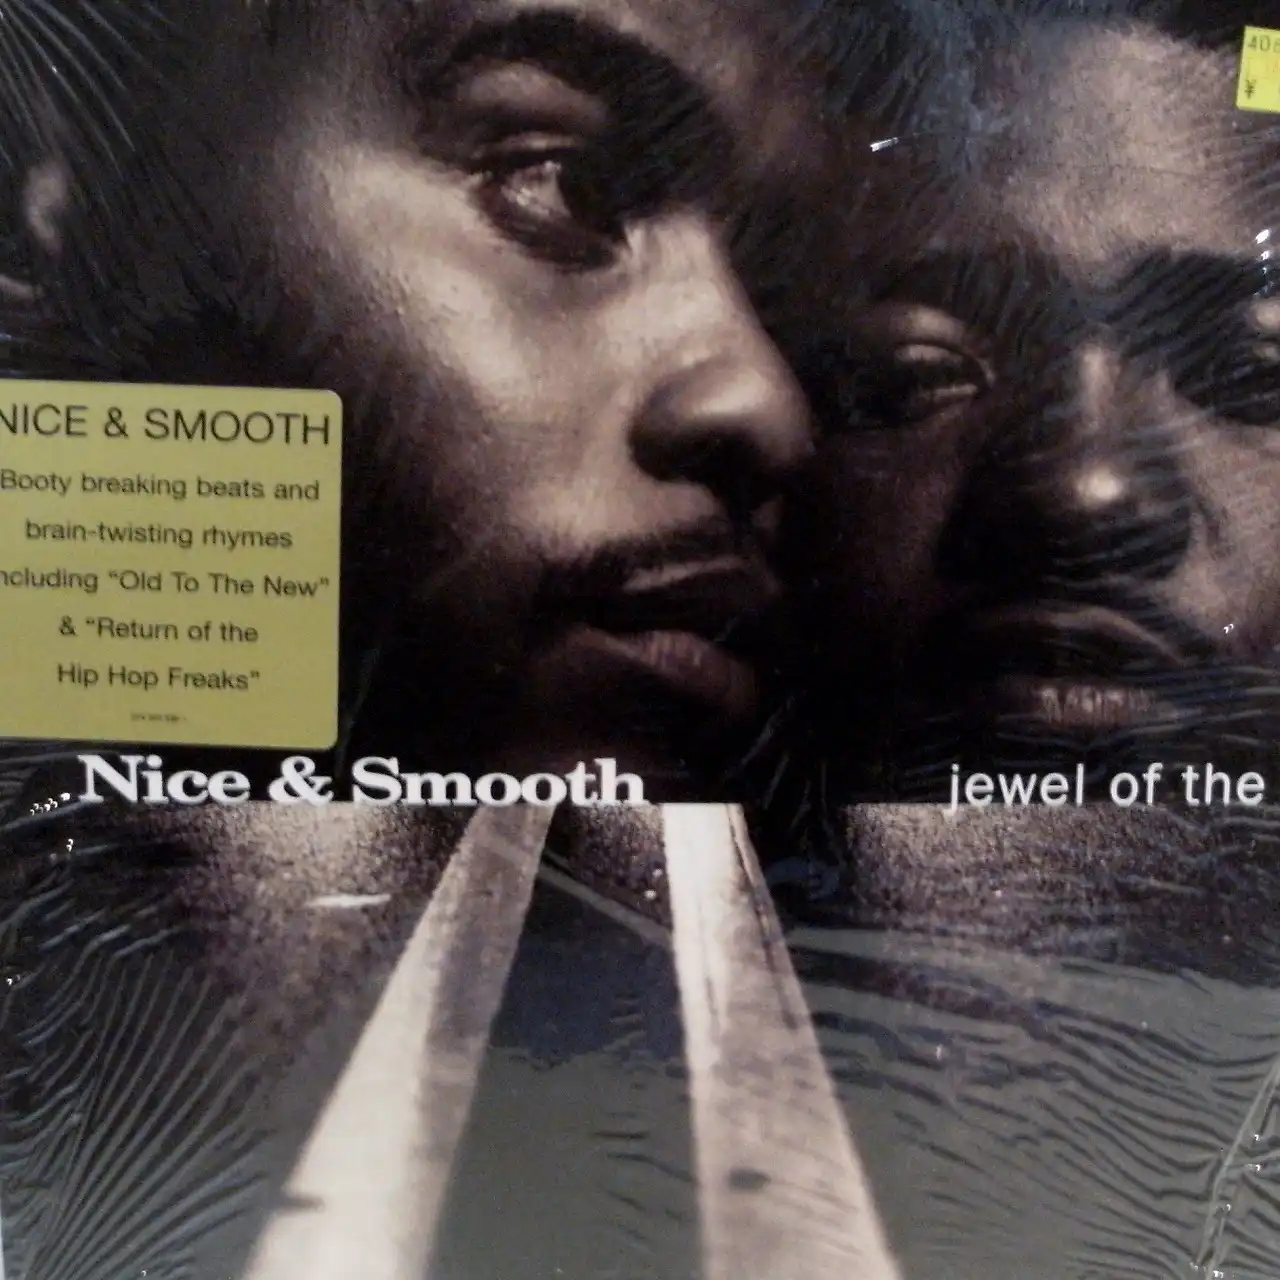 NICE & SMOOTH / JEWEL OF THE NILE